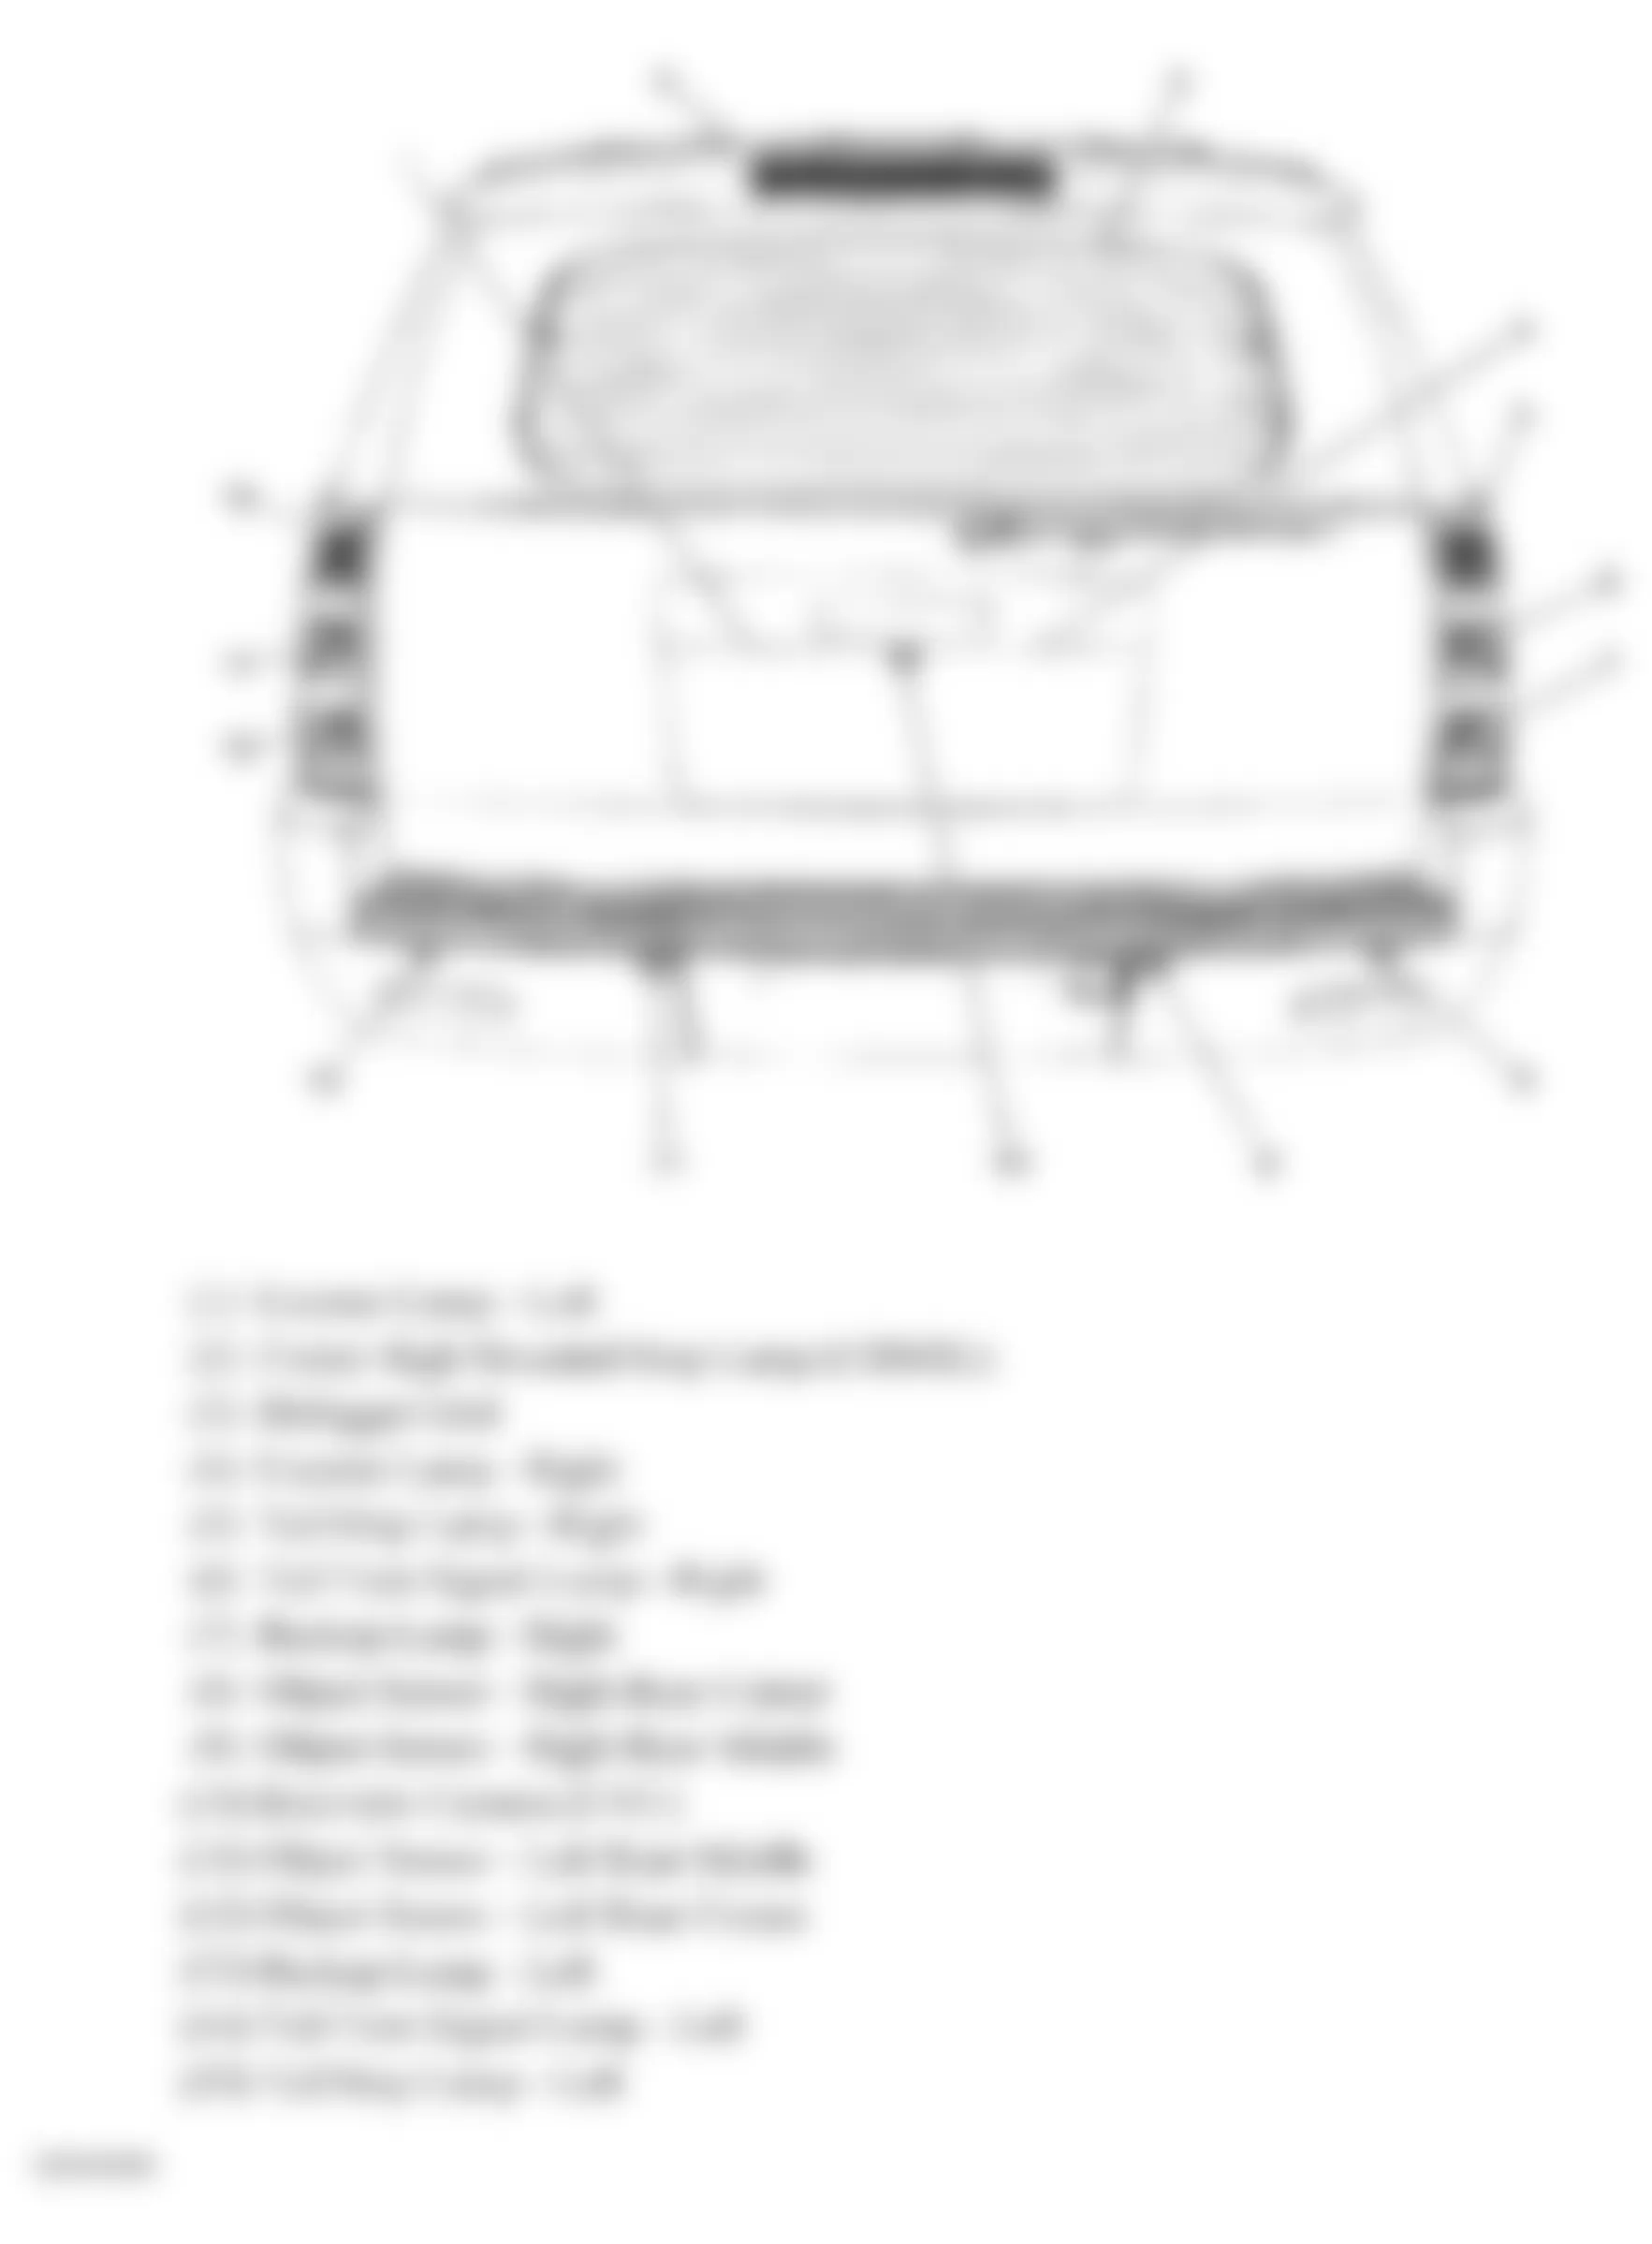 GMC Yukon Denali 2008 - Component Locations -  Rear Of Vehicle (Yukon W/One Piece Liftgate)